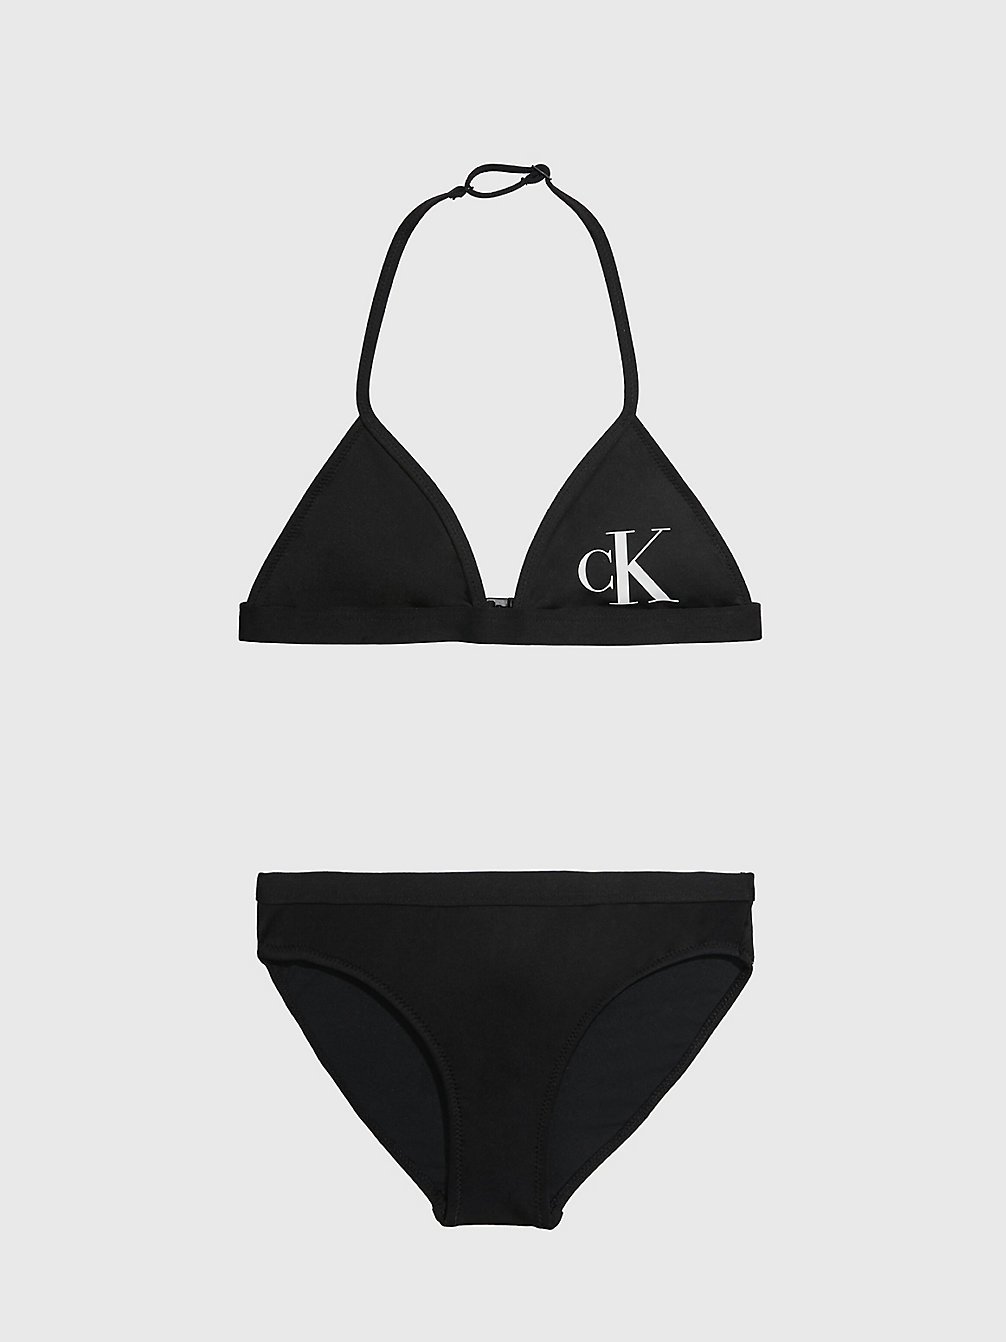 PVH BLACK Ensemble Bikini Triangle Pour Fille - CK Monogram undefined girls Calvin Klein